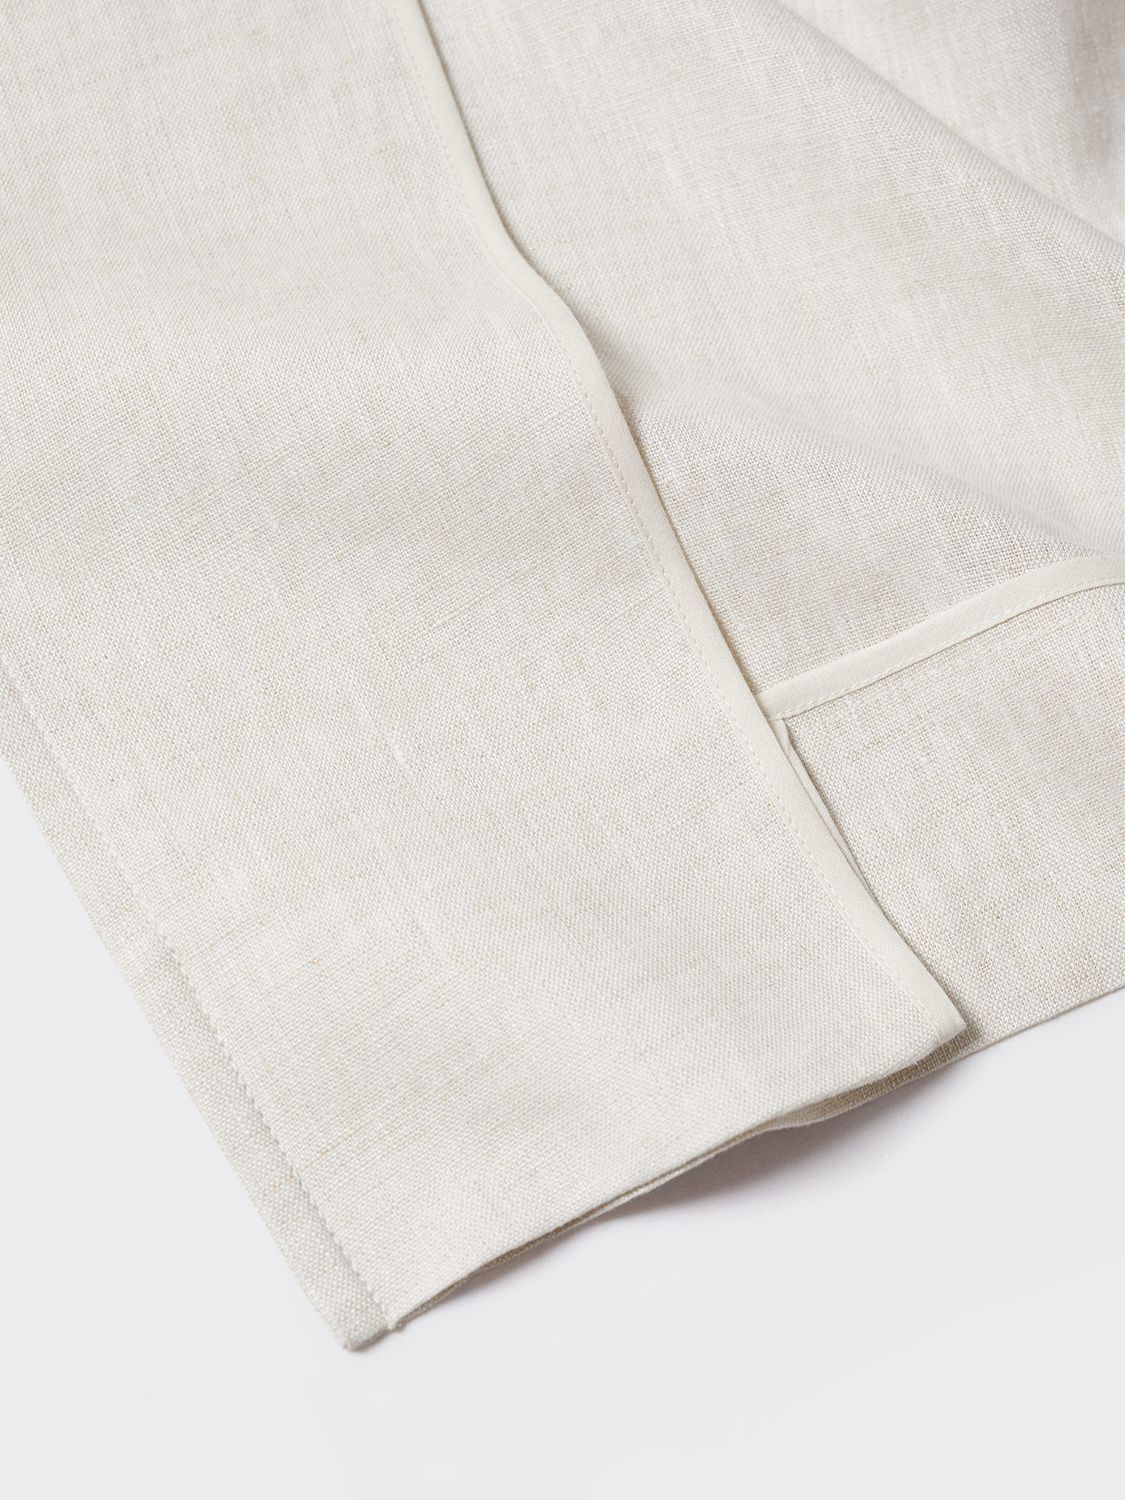 Mango Sahara Linen Trench Coat, Pastel Grey